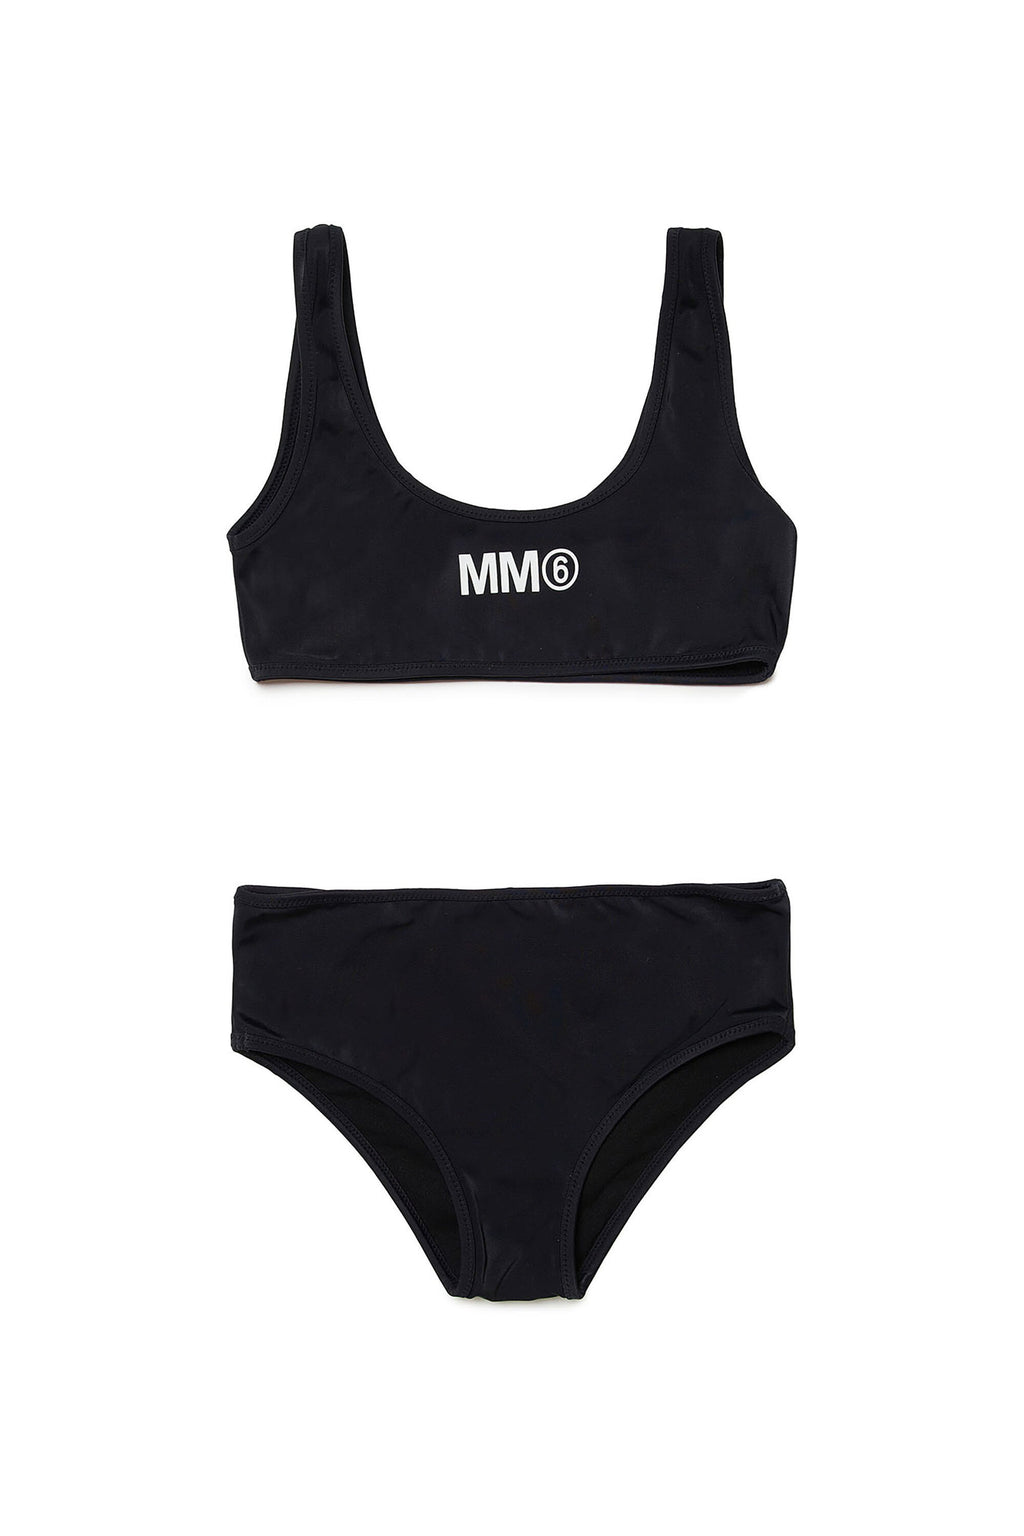 Costume bikini in lycra con logo MM6